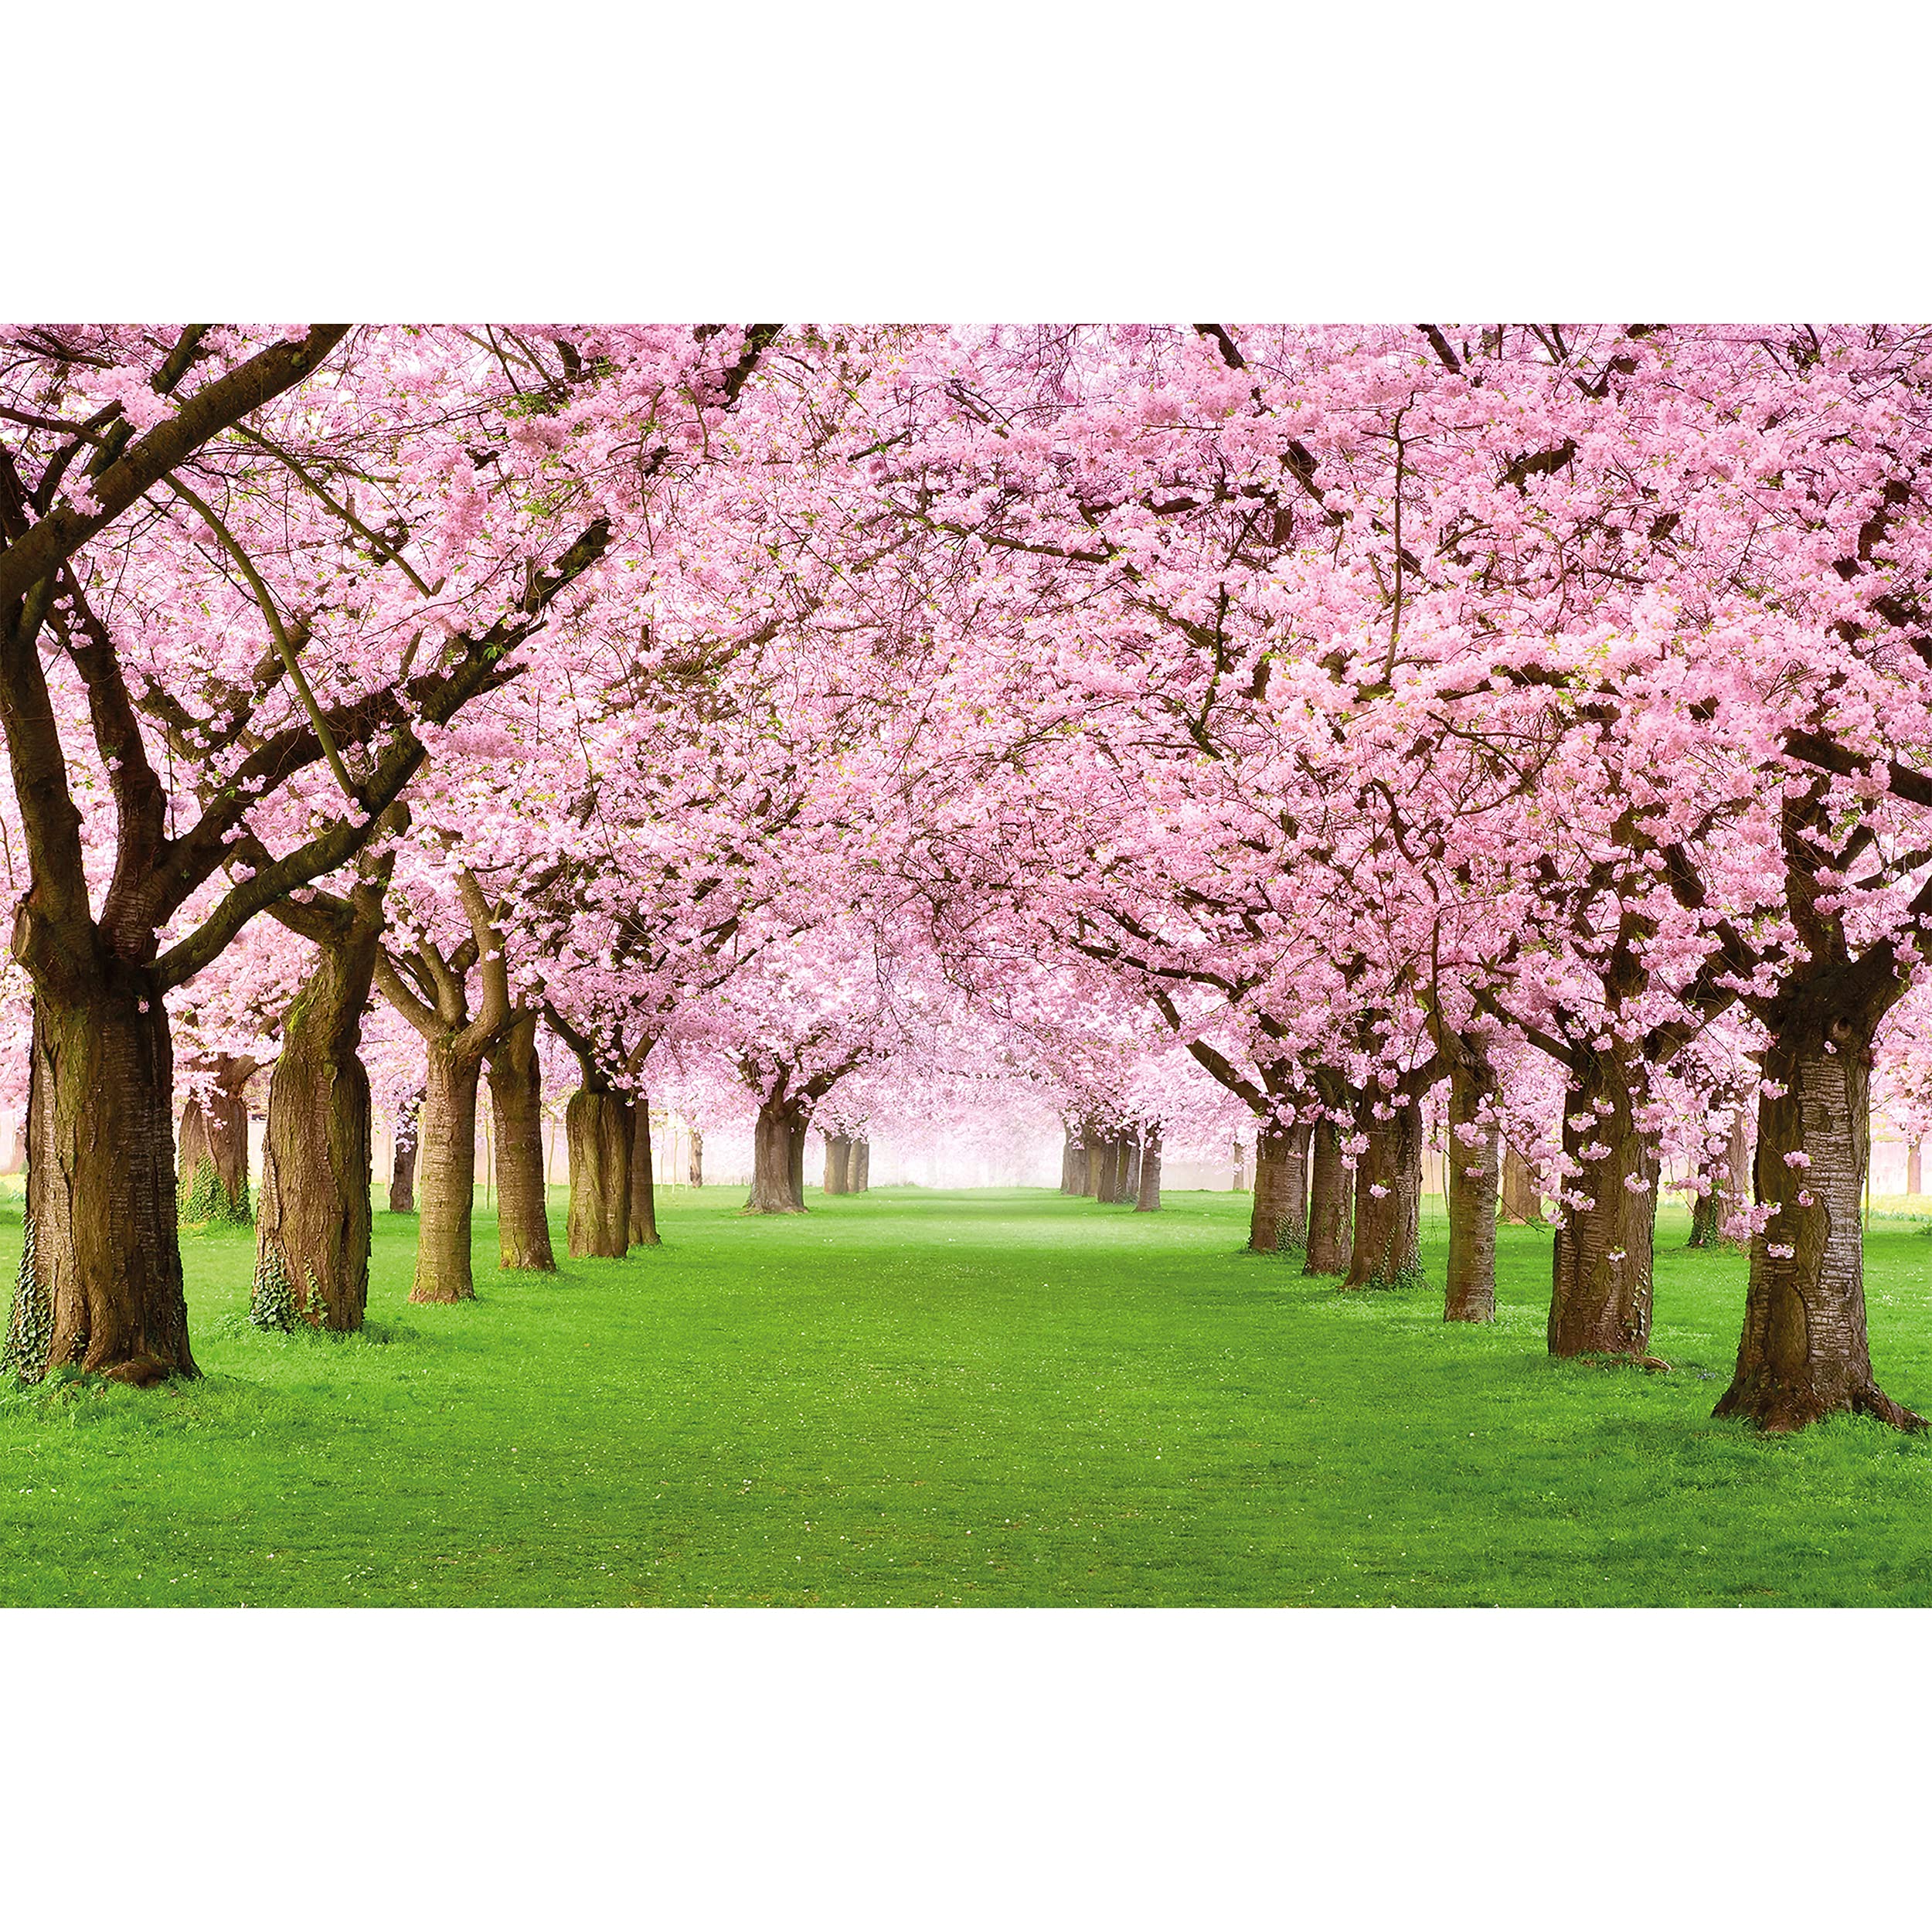 Photo Wallpaper – Cherry Blossom – Picture Decoration Spring Tree Avenue Nature Japan Landscape Sakura Bloom Tokyo Flowers Image Decor Wall Mural (...